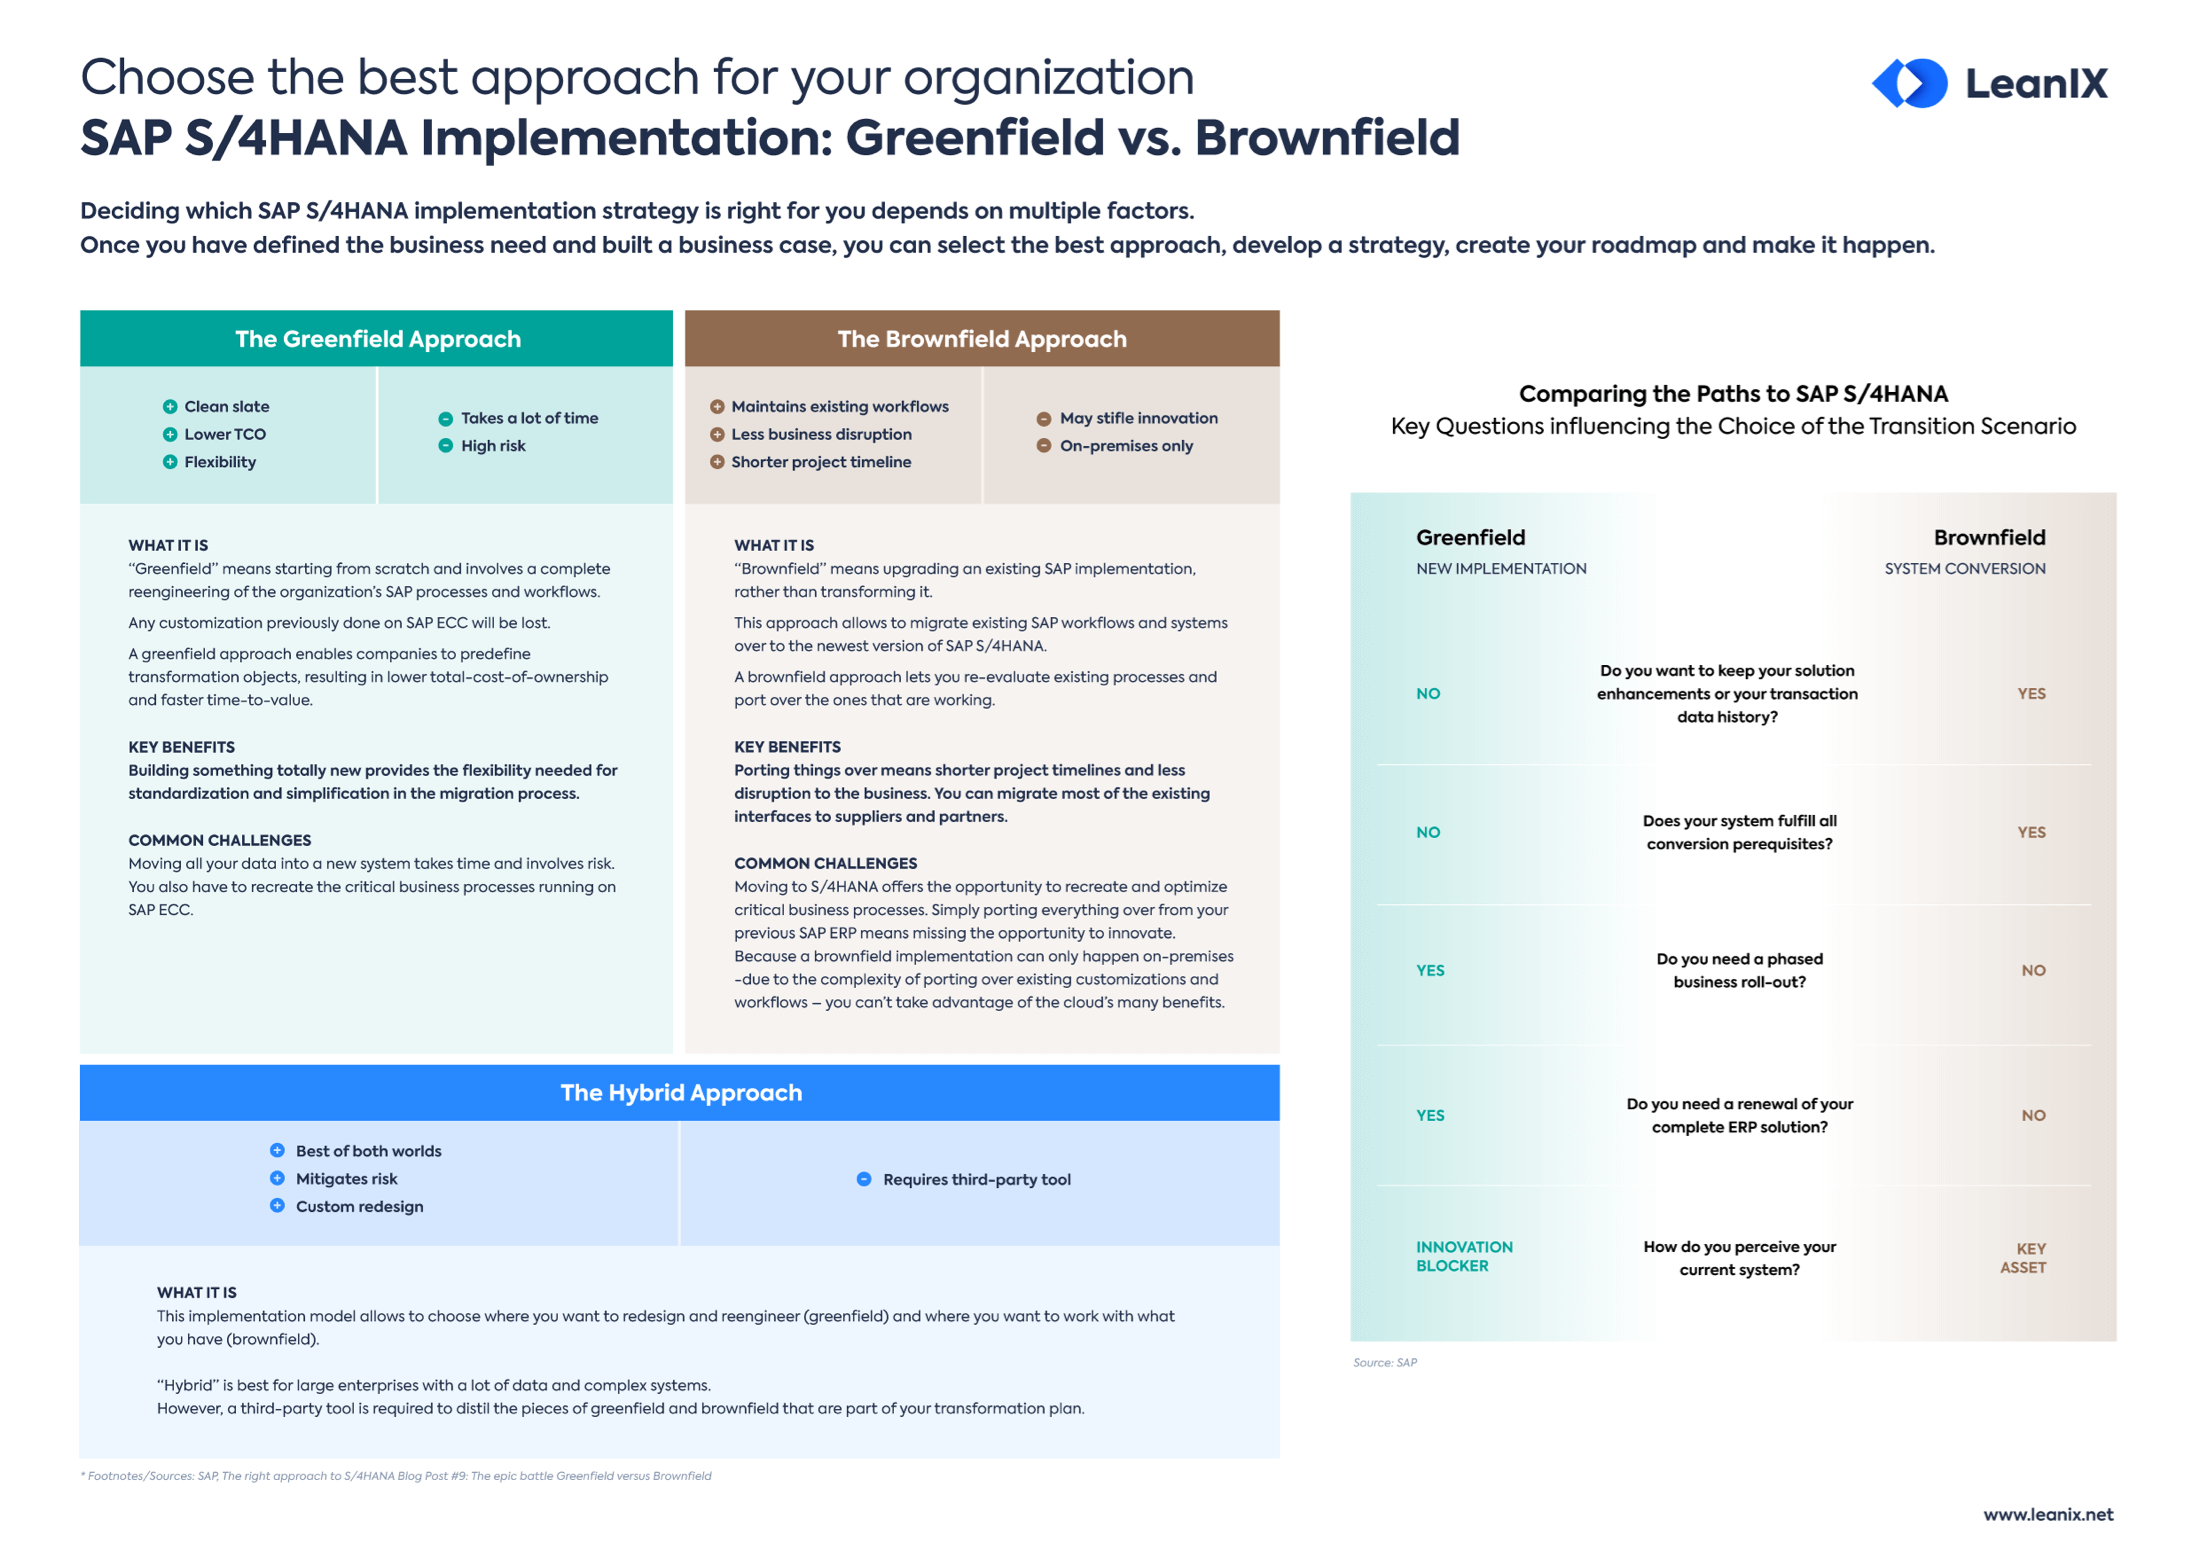 Greenfield vs Brownfield comparison in SAP S/4HANA Implementation